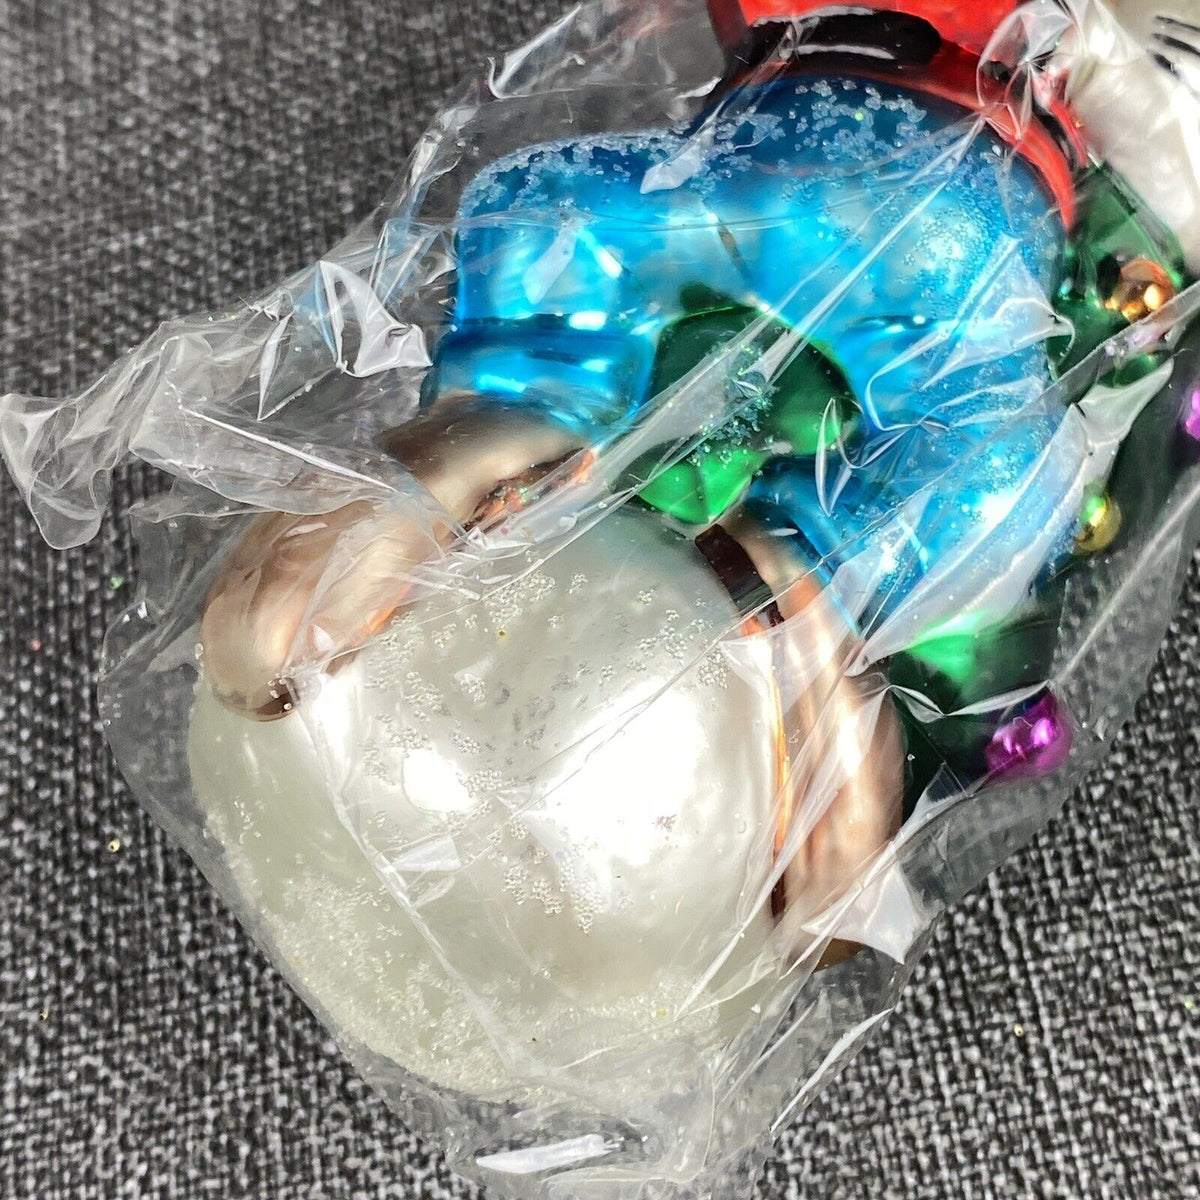 Christopher Radko Disney Pluto glass Ornament Sealed with Original Box VIDEO